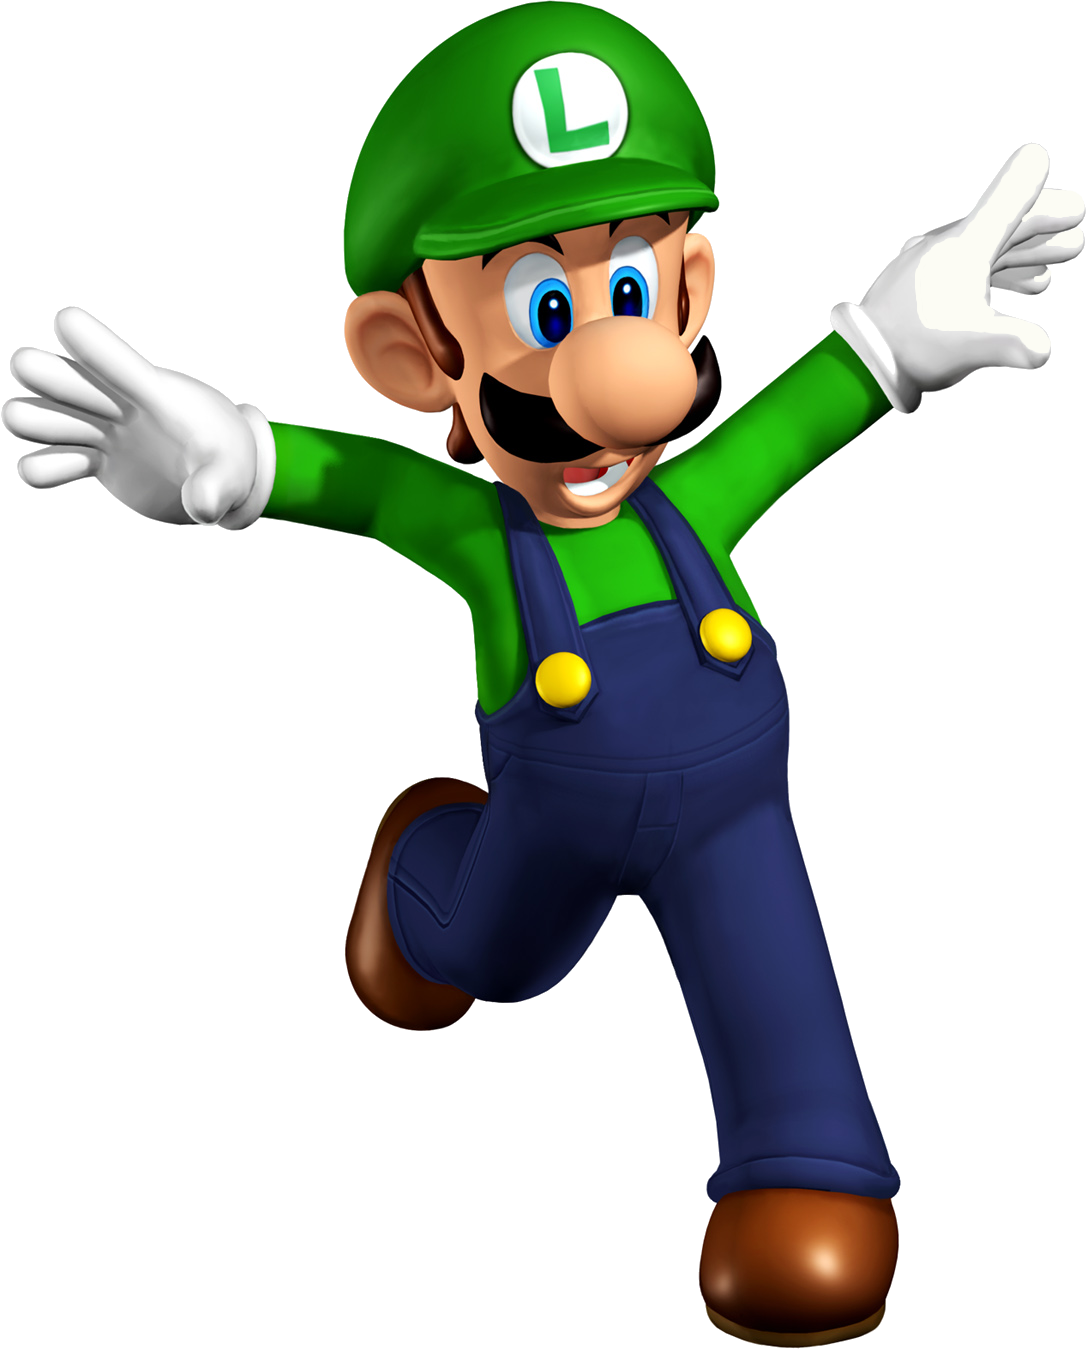 Super Mario Luigi PNG Image - PurePNG | Free transparent CC0 PNG Image